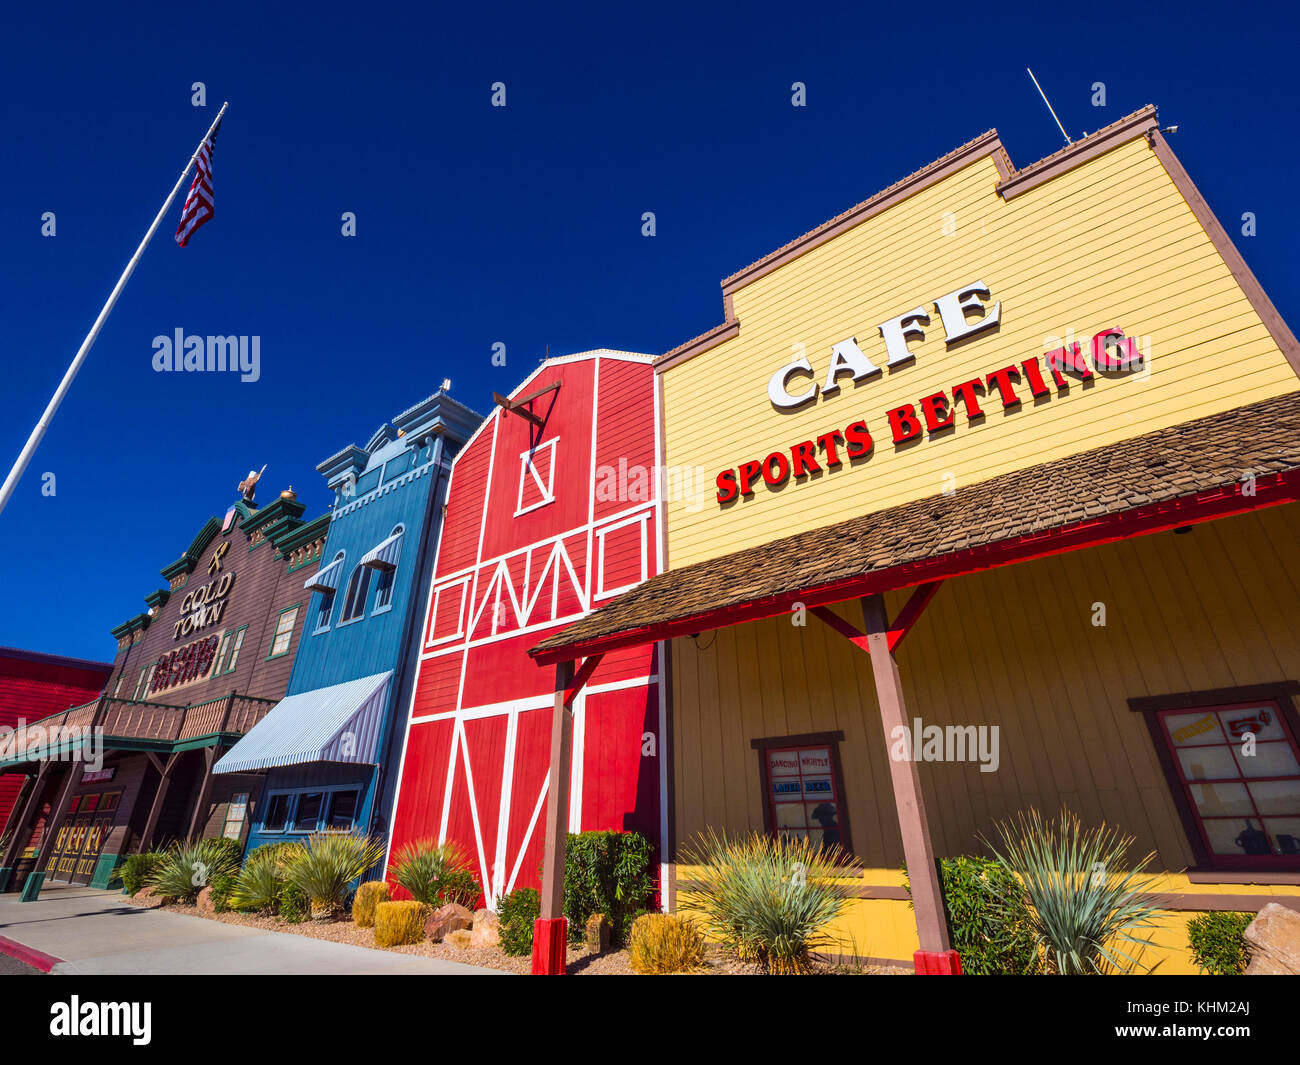 Histroic saloon building and casino in Pahrump Nevada - PAHRUMP / NEVADA - OCTOBER 23, 2017 Stock Photo